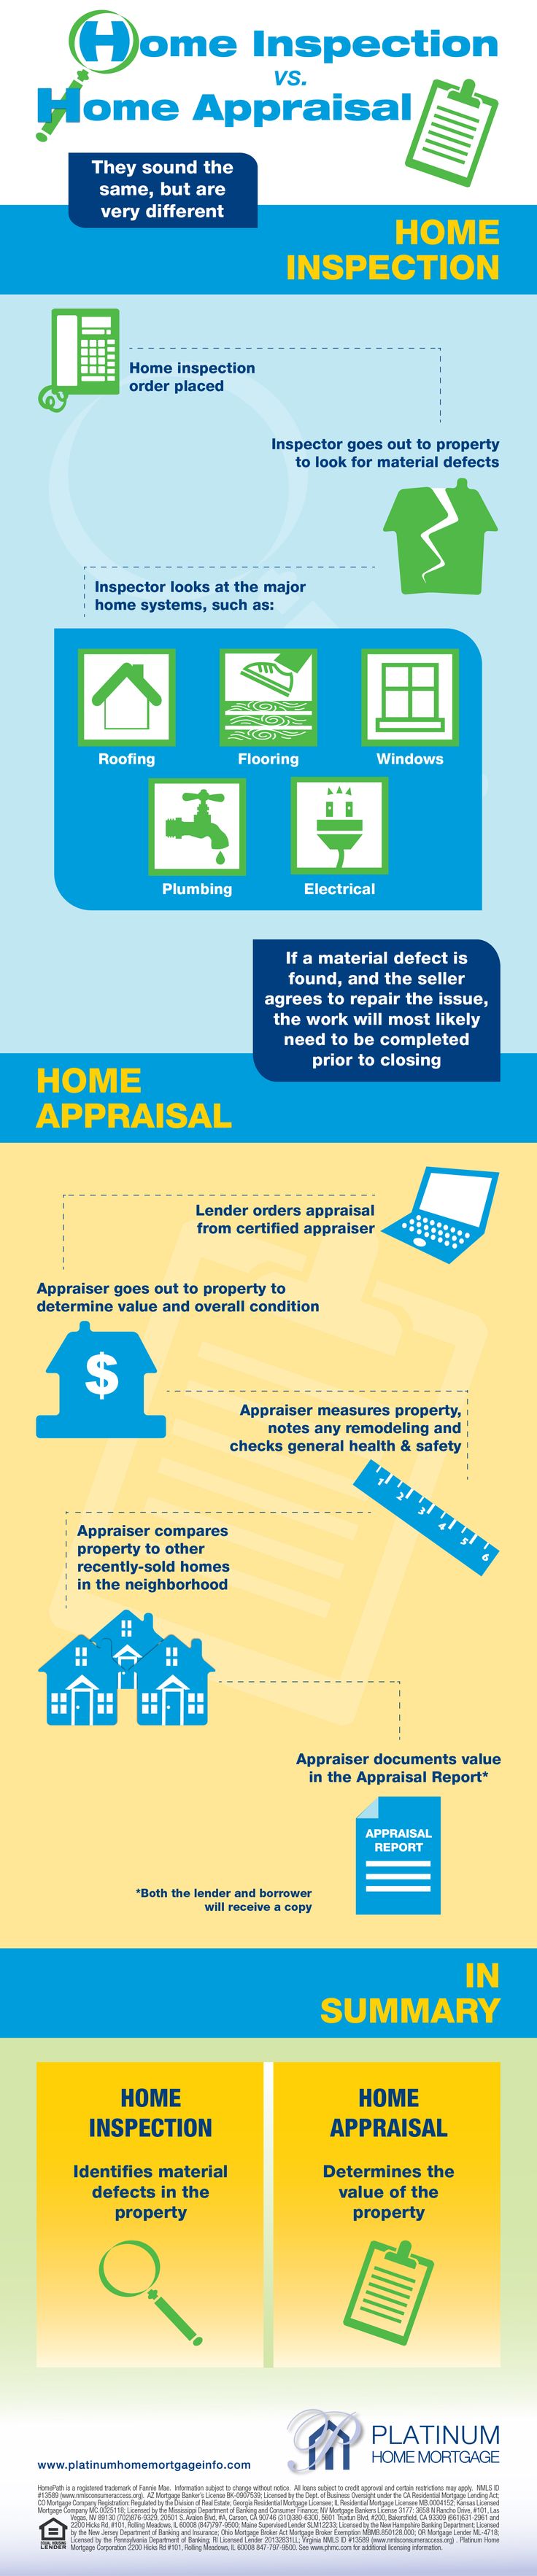 home_appraisal_is_not_a_home_inspectionjpg_3532